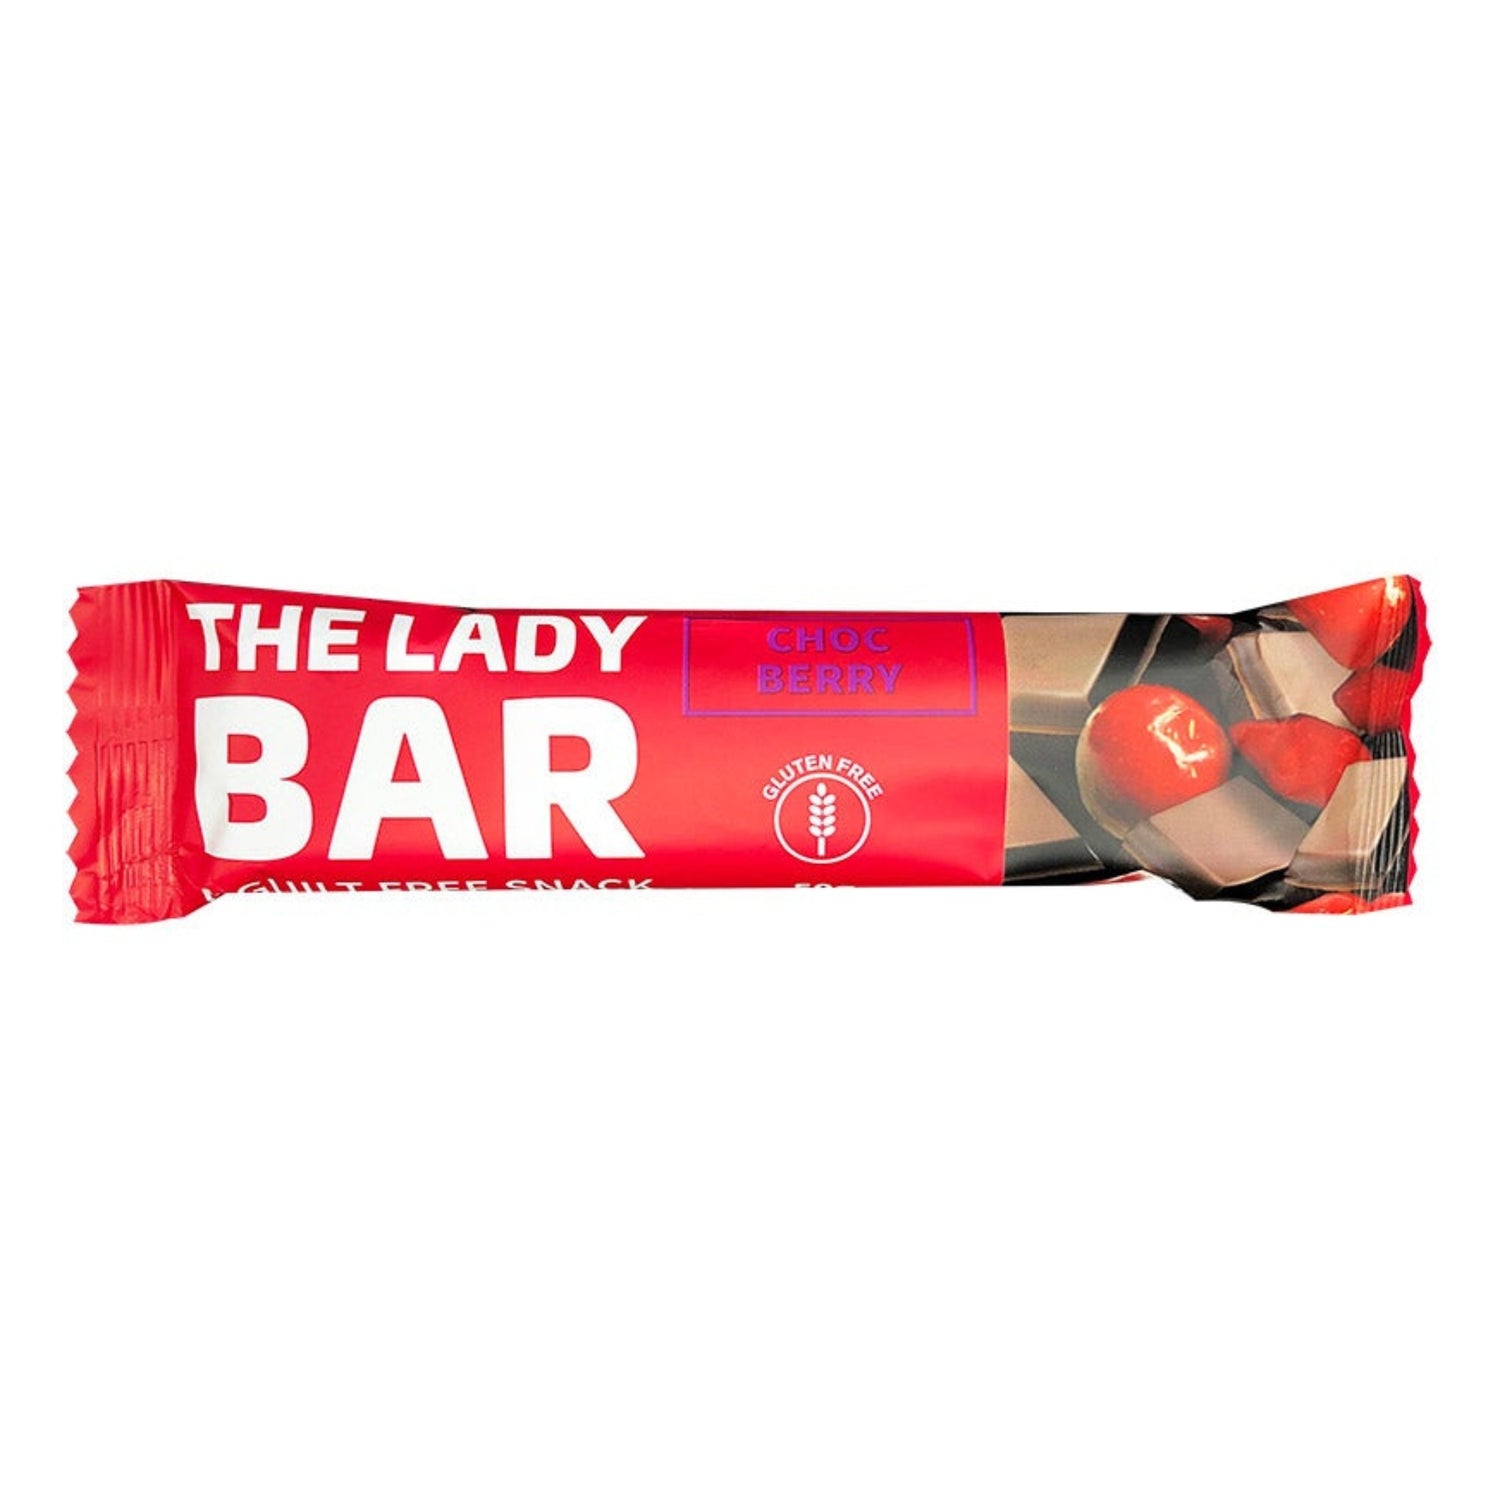 The Lady Bar